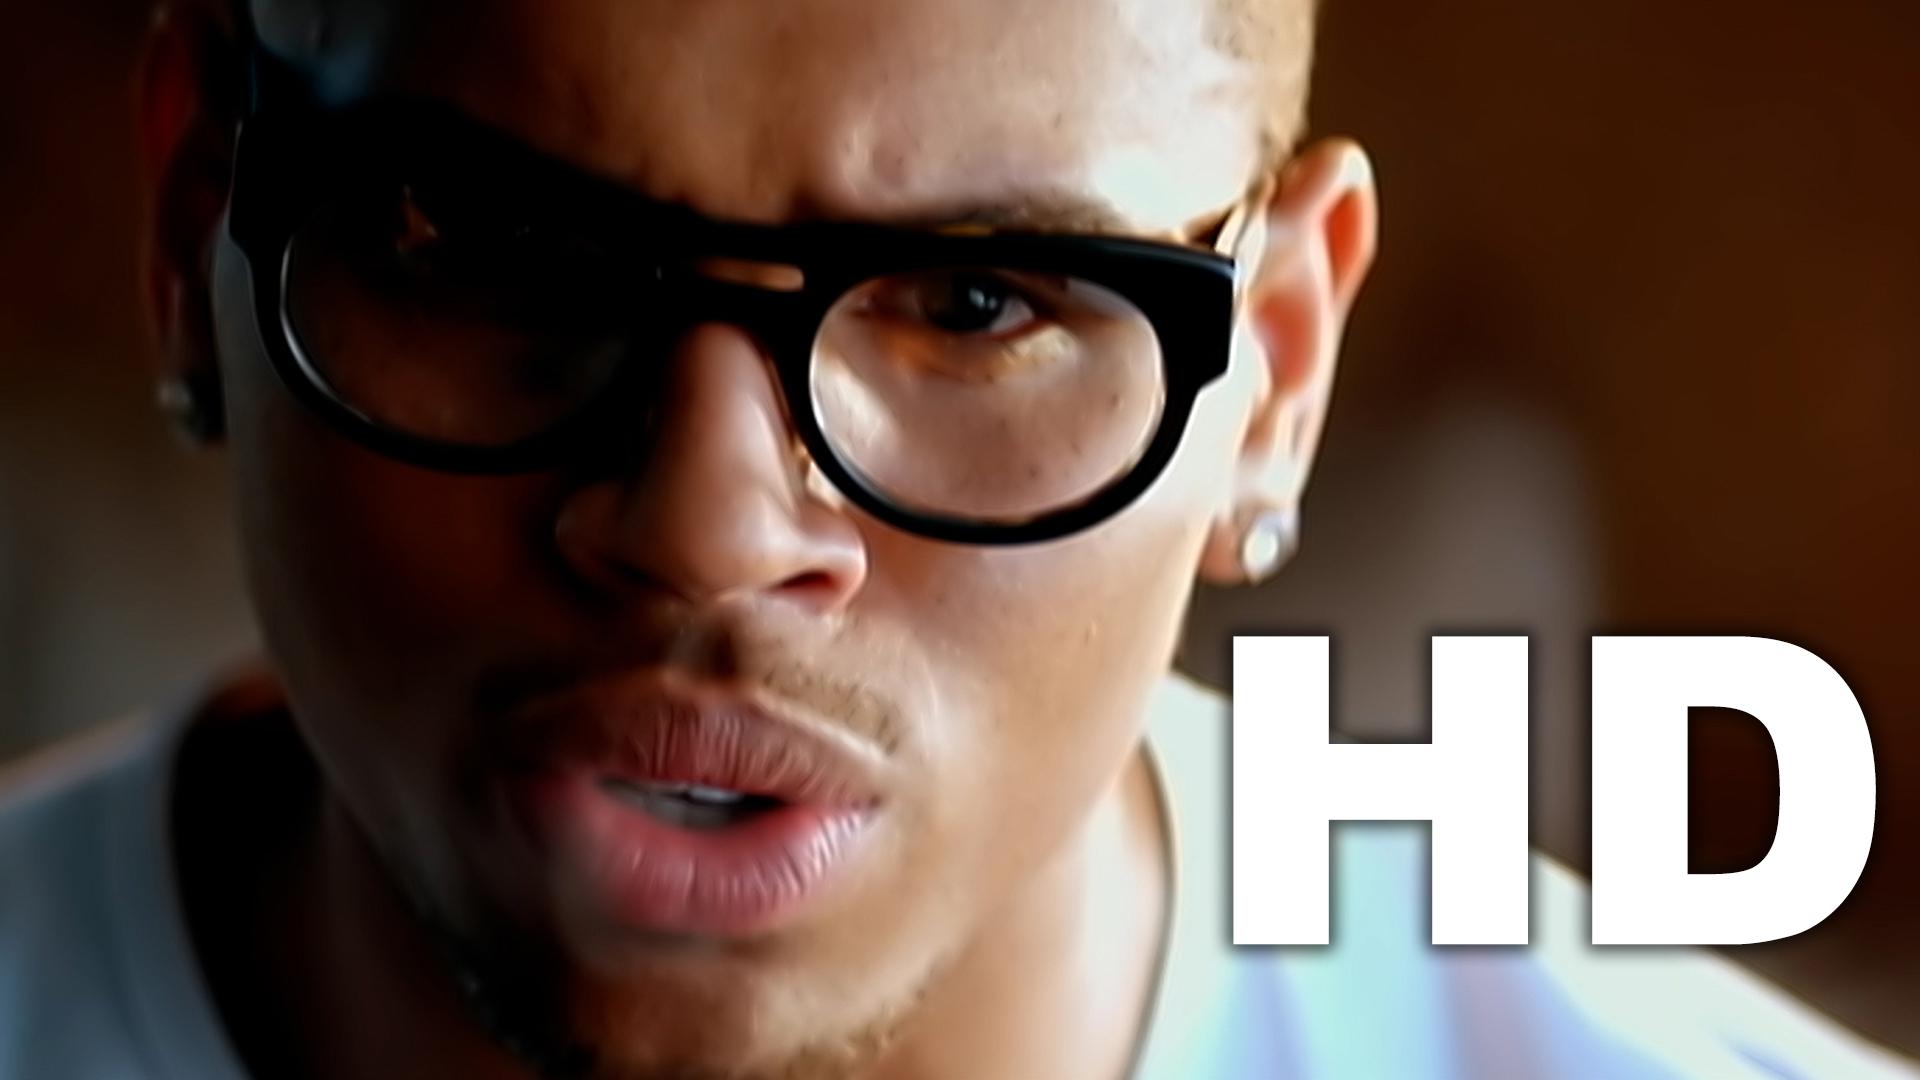 Chris Brown - Crawl (Official HD Video)